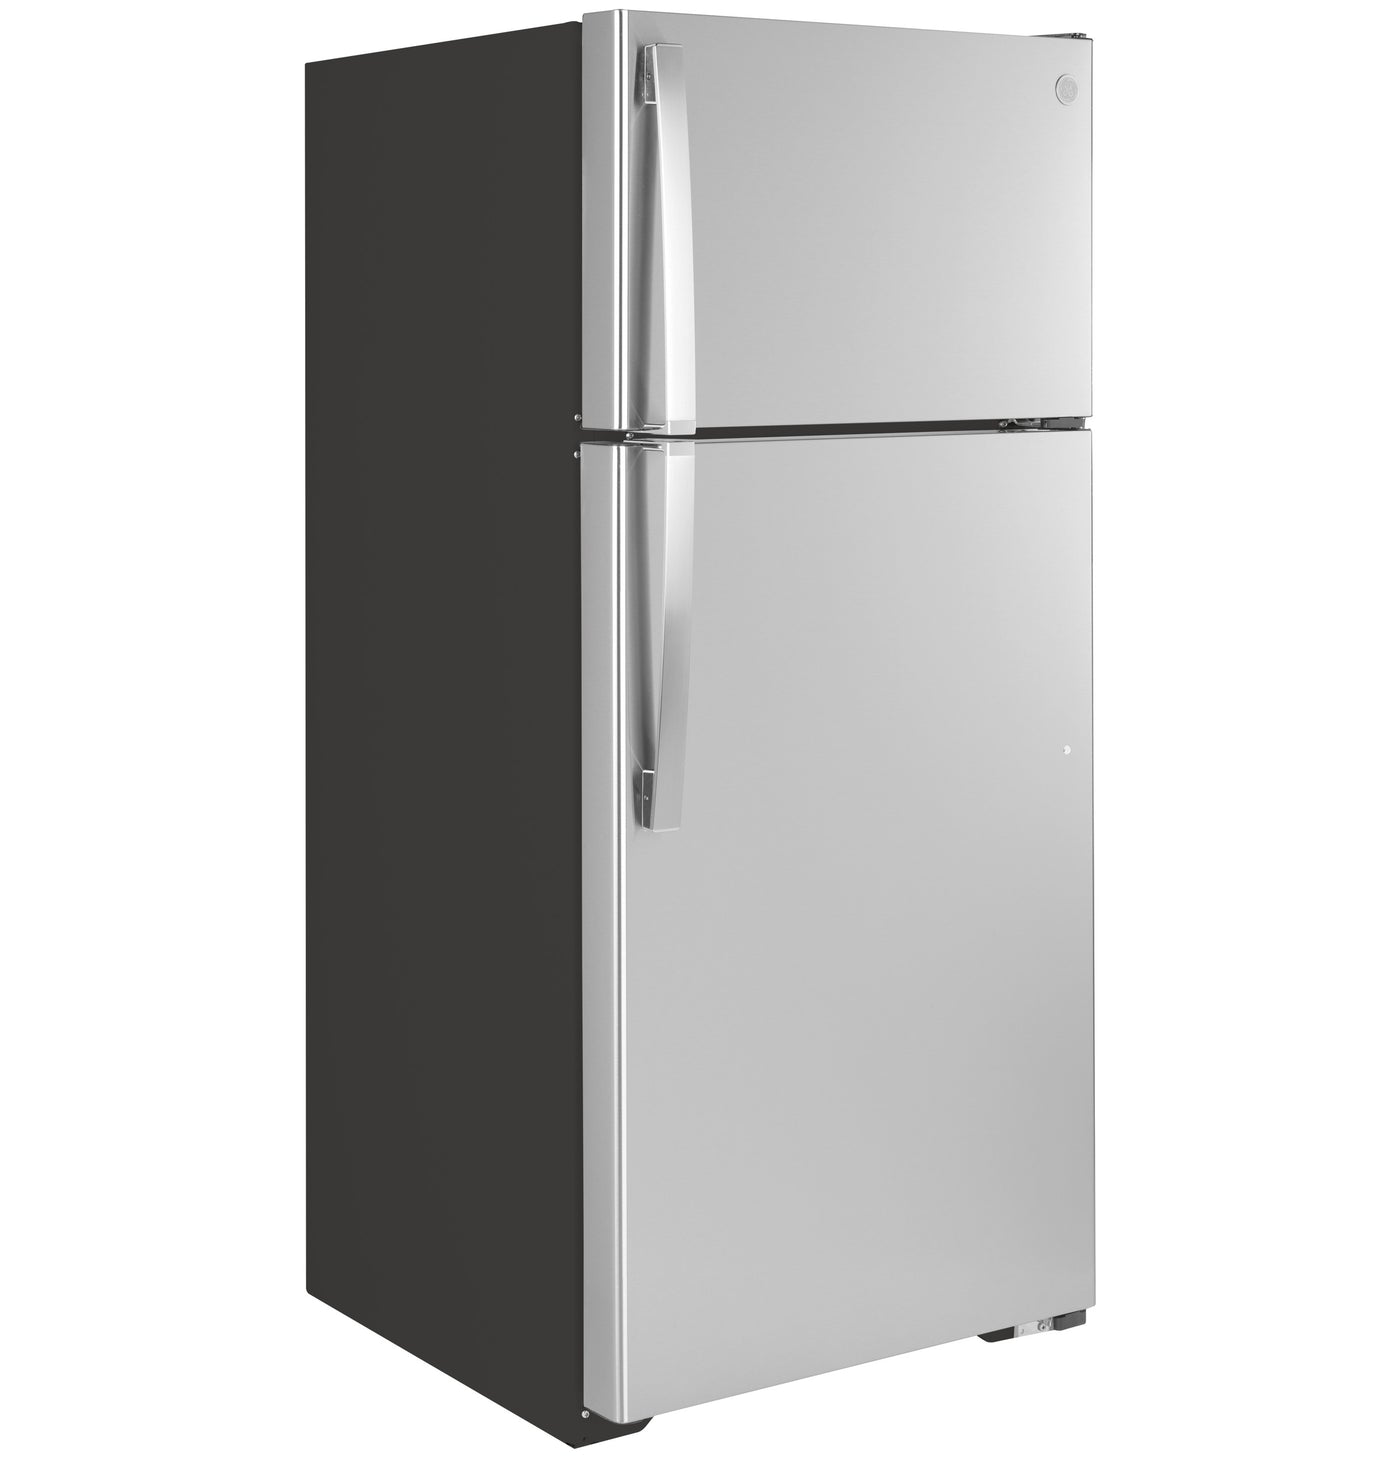 GE Appliances GIE17GSNRSS Refrigerator/Freezer 16.6 Cu. Ft with 1-Year Warranty